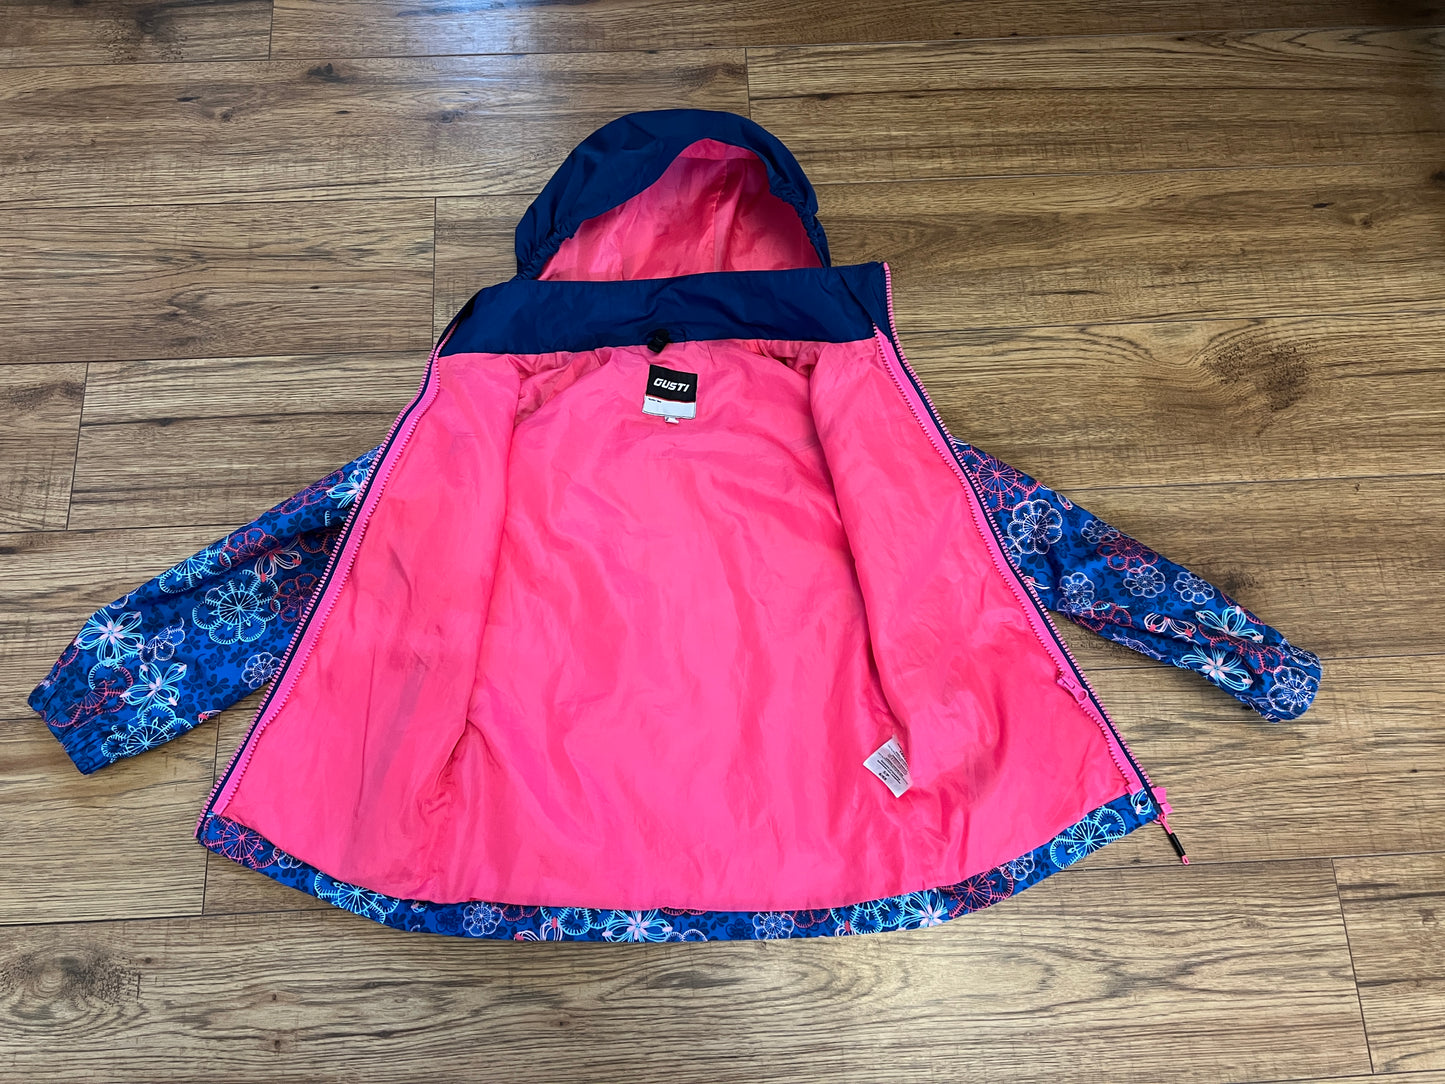 Rain Coat Child Size 6x Gusti Marine Blue Pink Double Zipper Like New